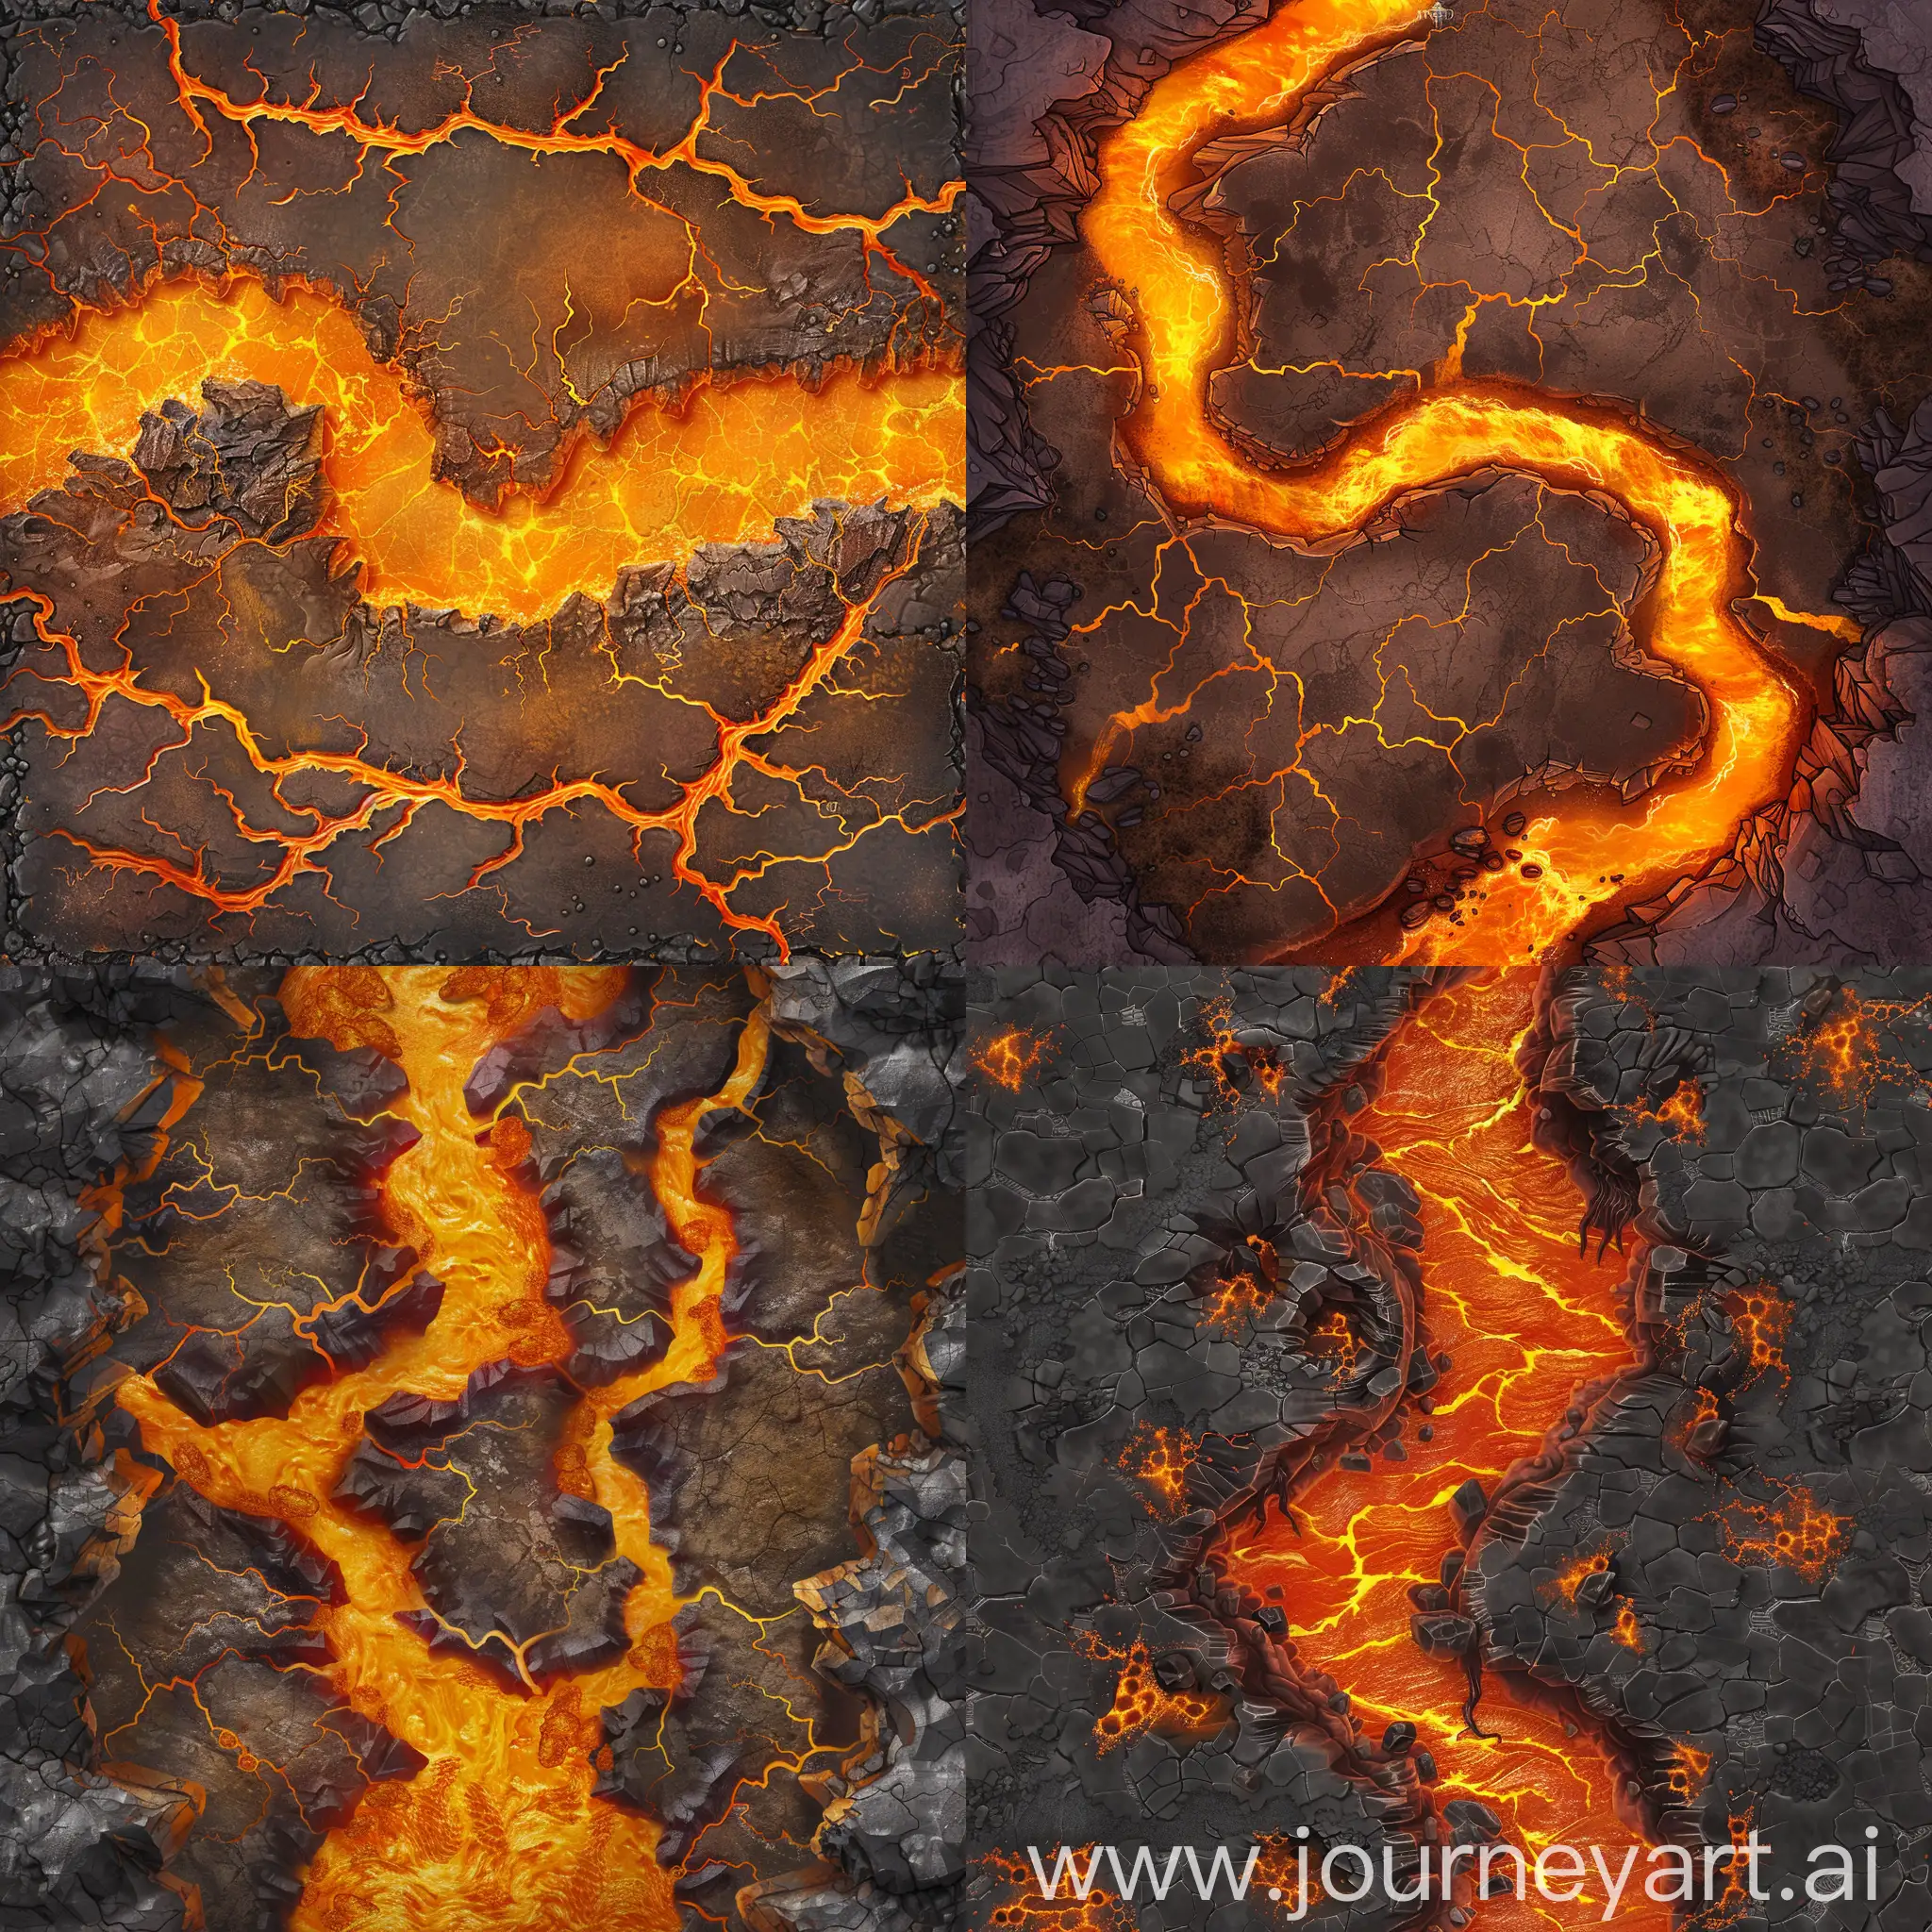 2D top-centered bird's-eye view RPG fantasy battlemap of a river of lava on a molten rock ground